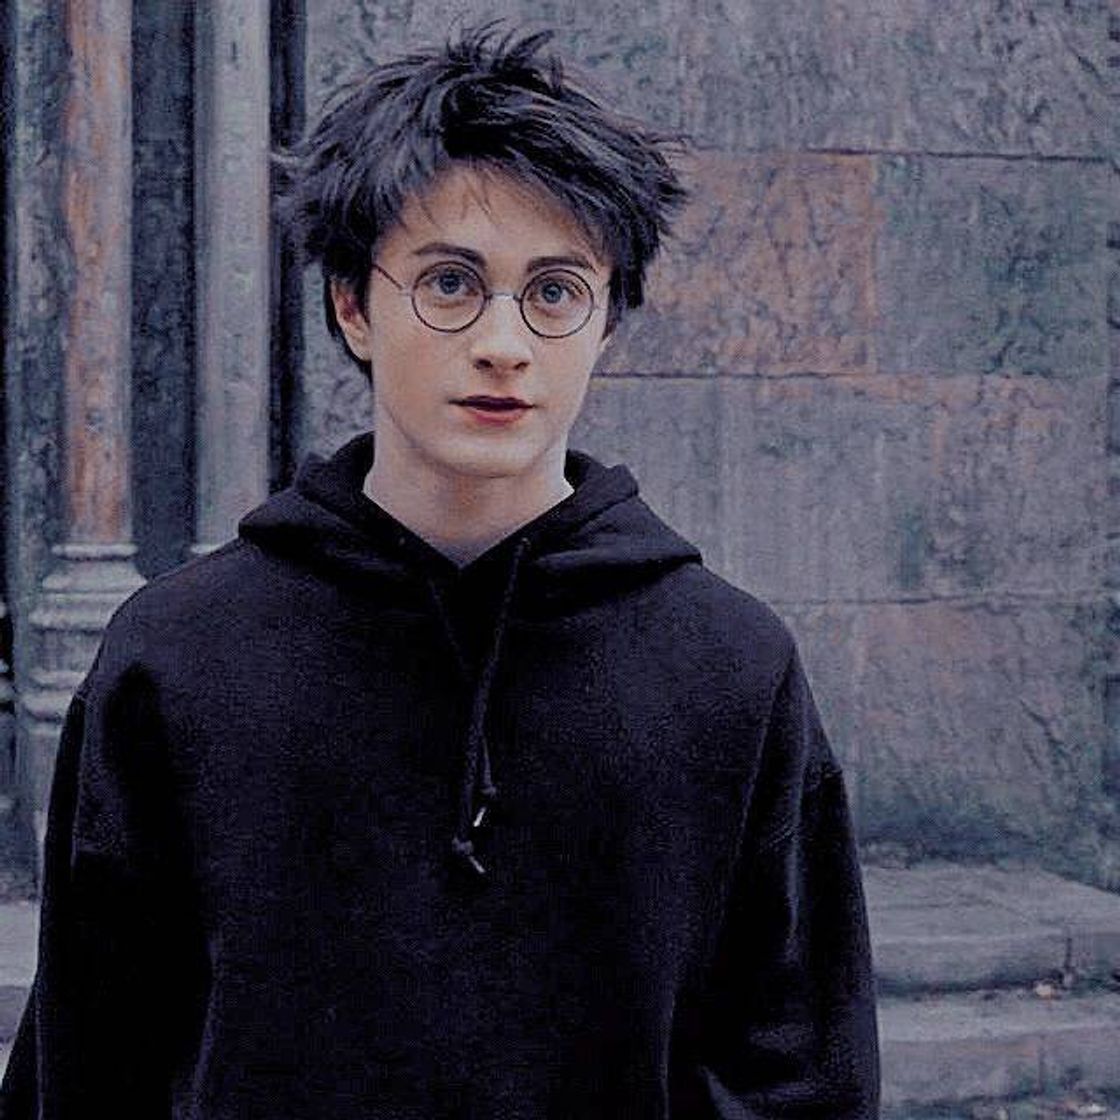 Daniel Radcliffe / Harry Potter